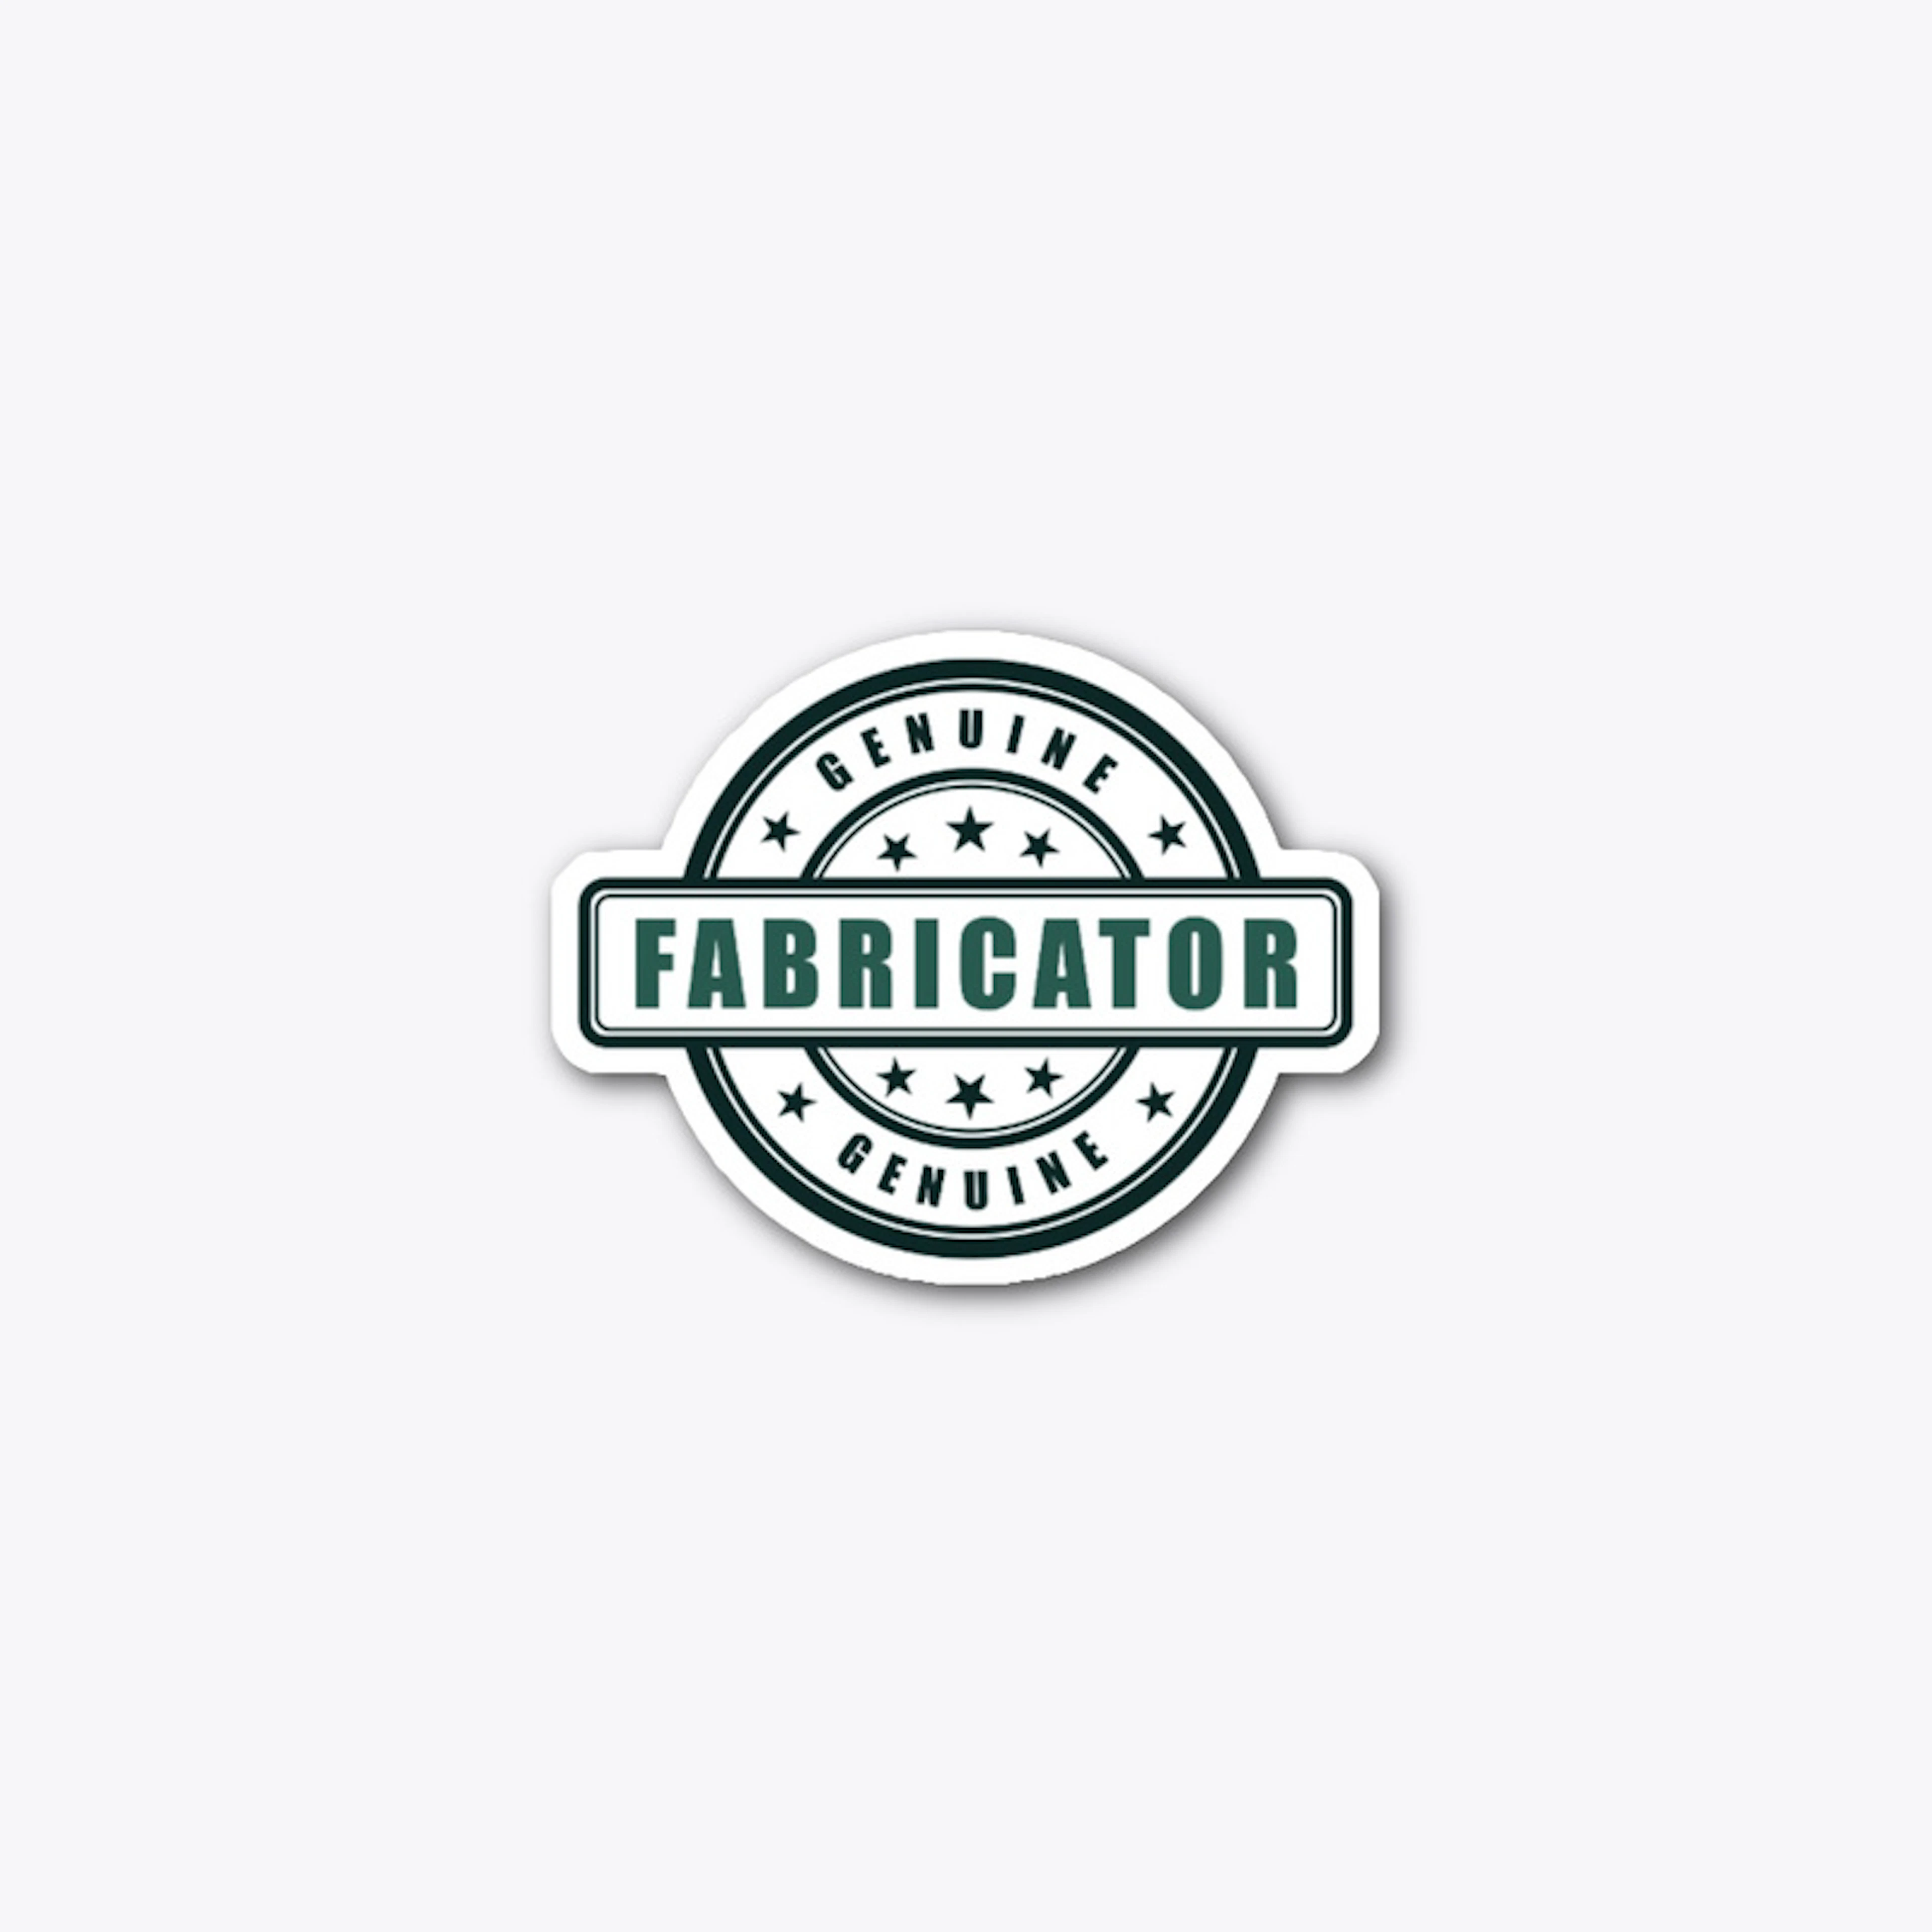 The Fabricator Sticker